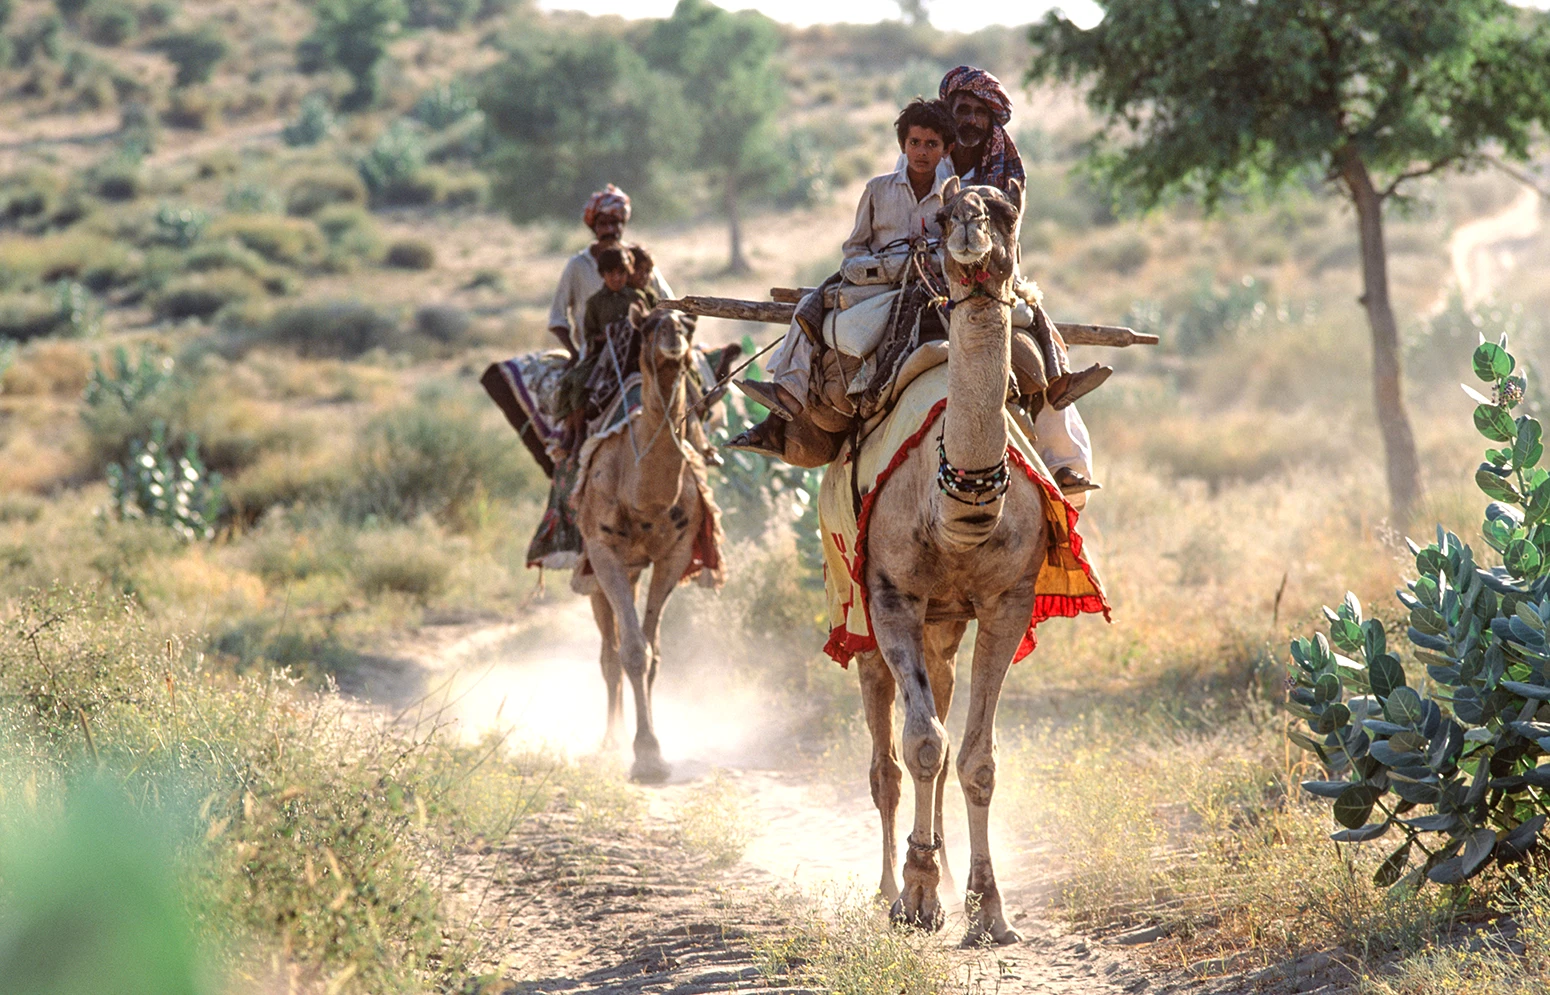 Thari-nomaden op kameelrug. Thar-woestijn, Pakistan.